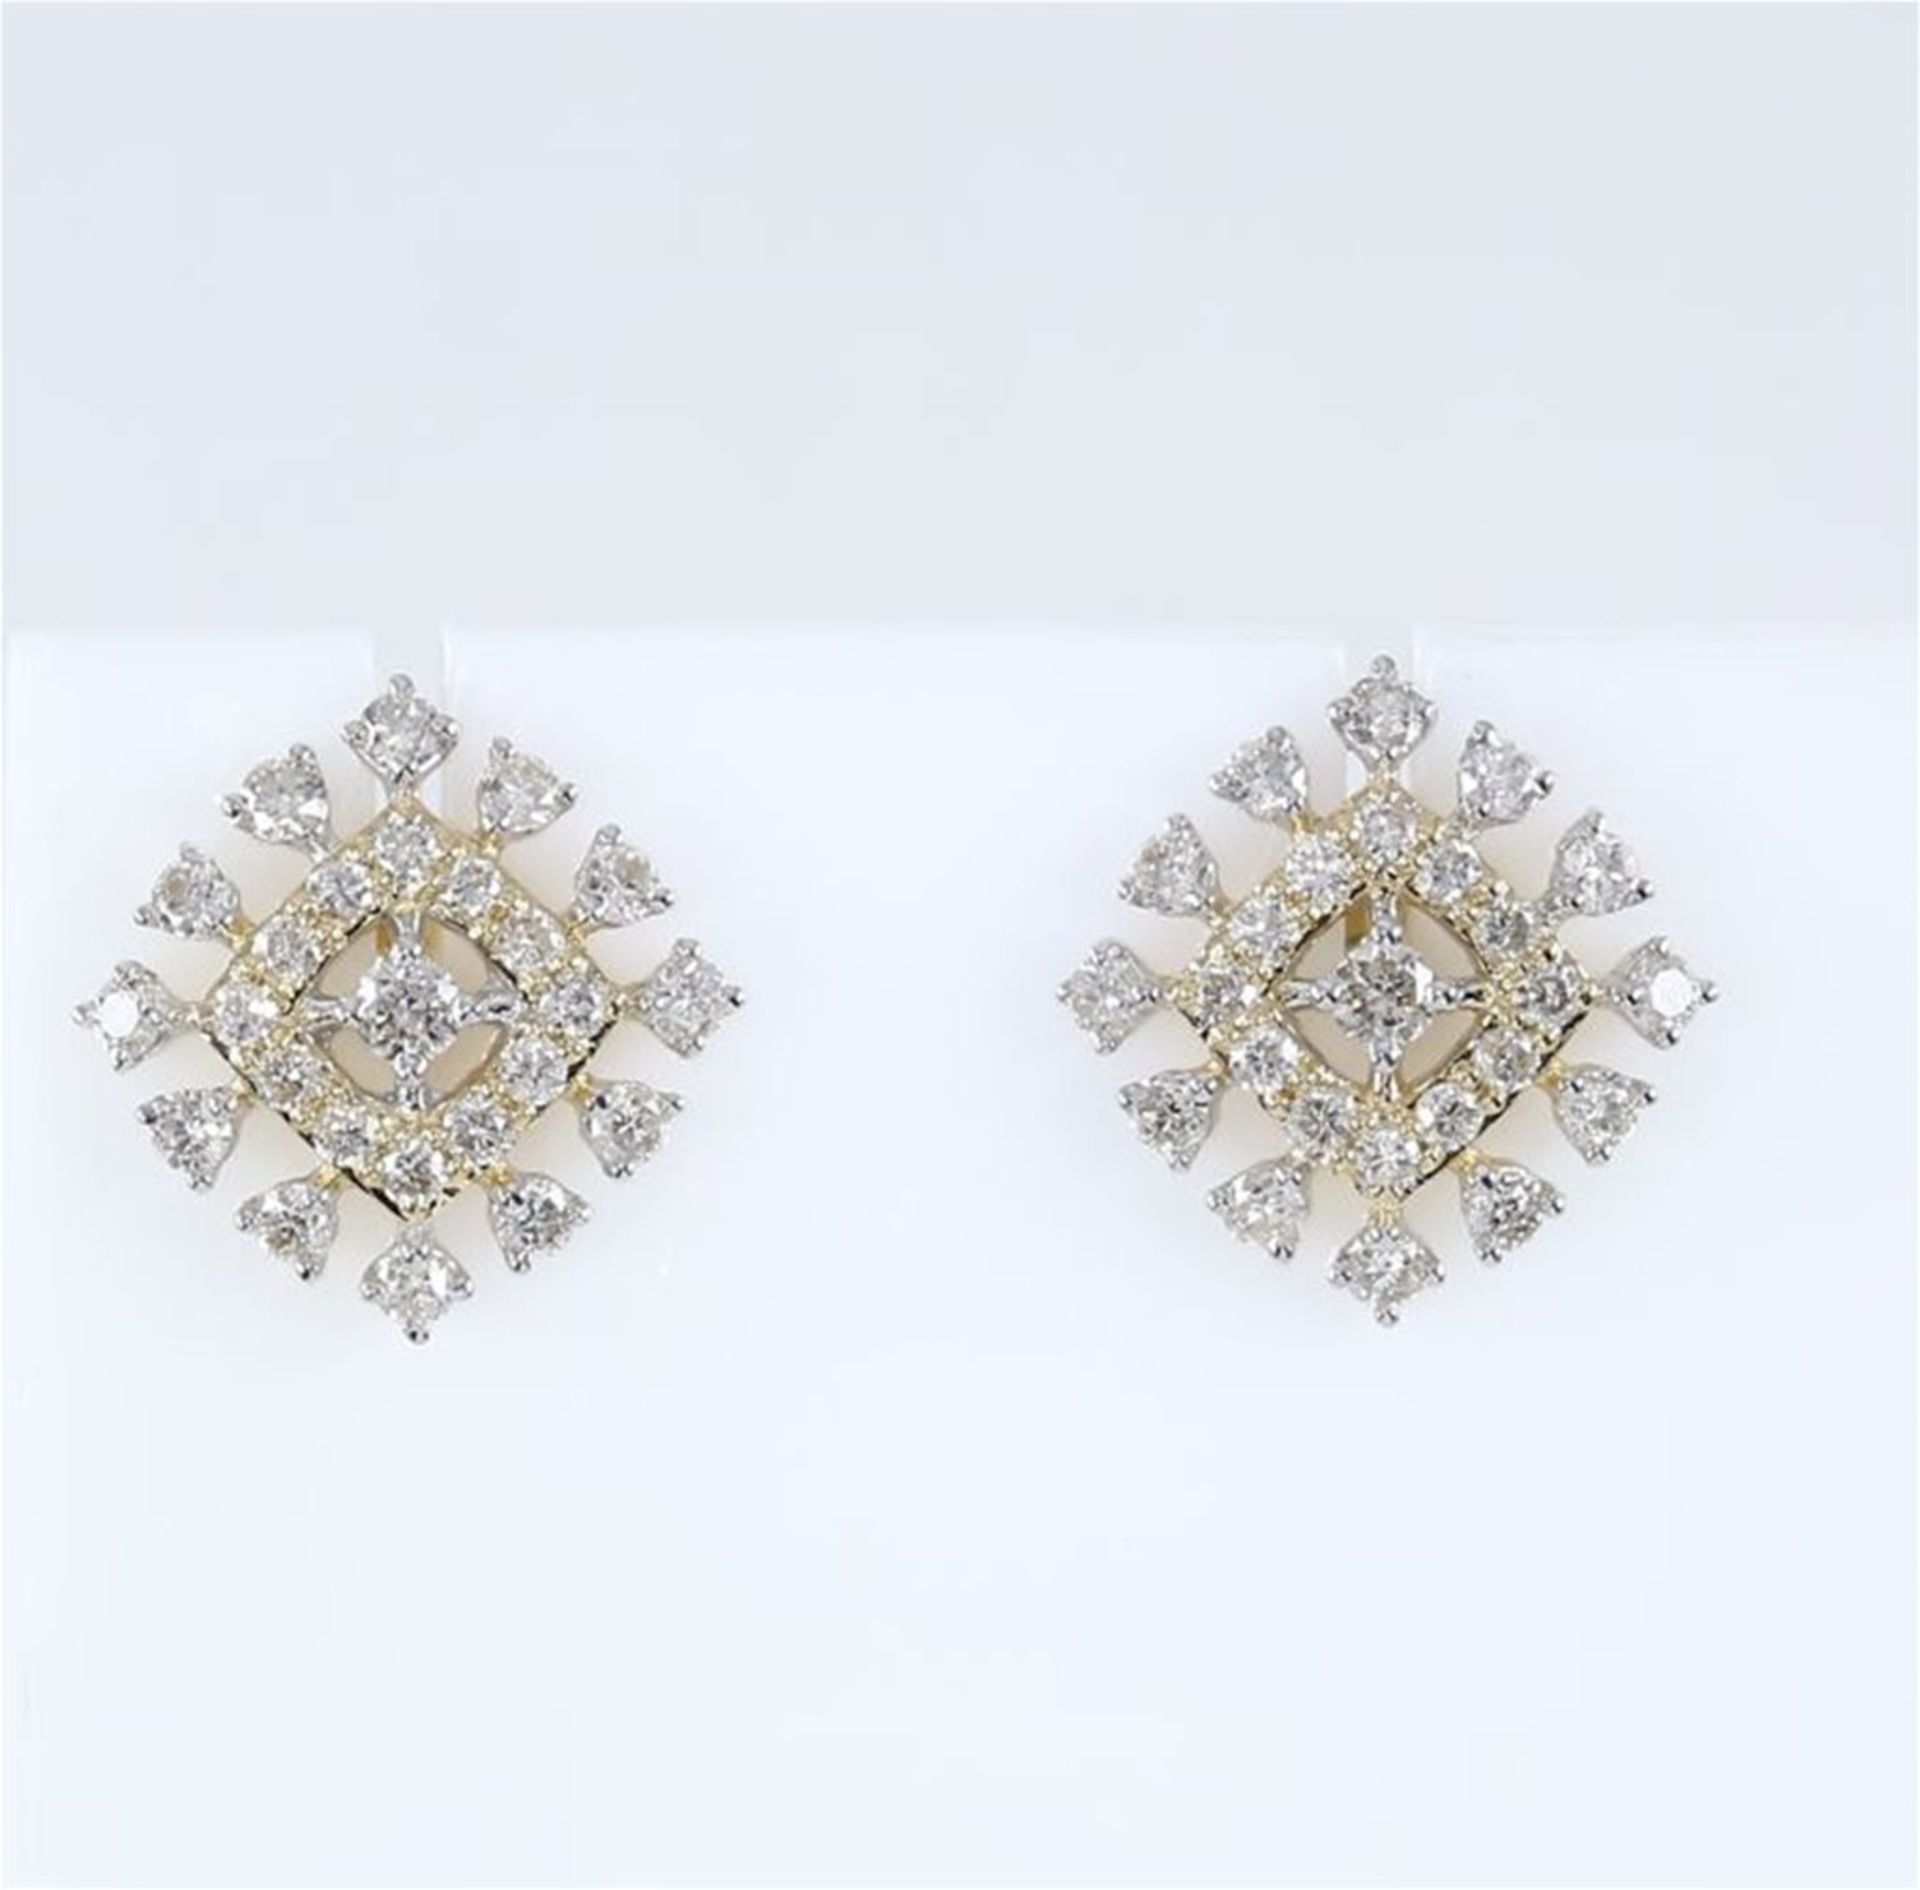 IGI Certified 18 K Yellow Gold Diamond Earrings